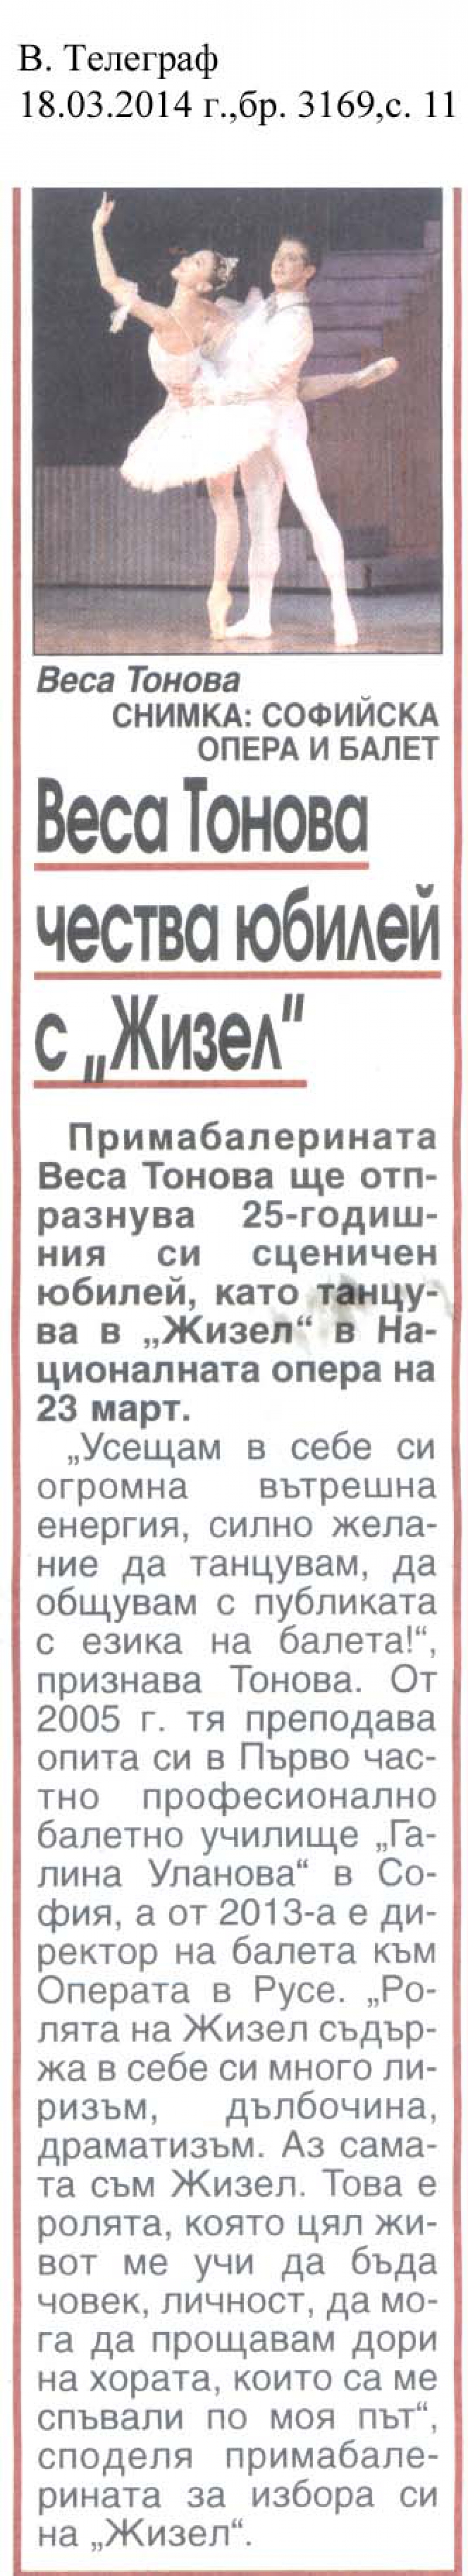 Веса Тонова чества юбилей с "Жизел" - в-к Телеграф 18.03.14